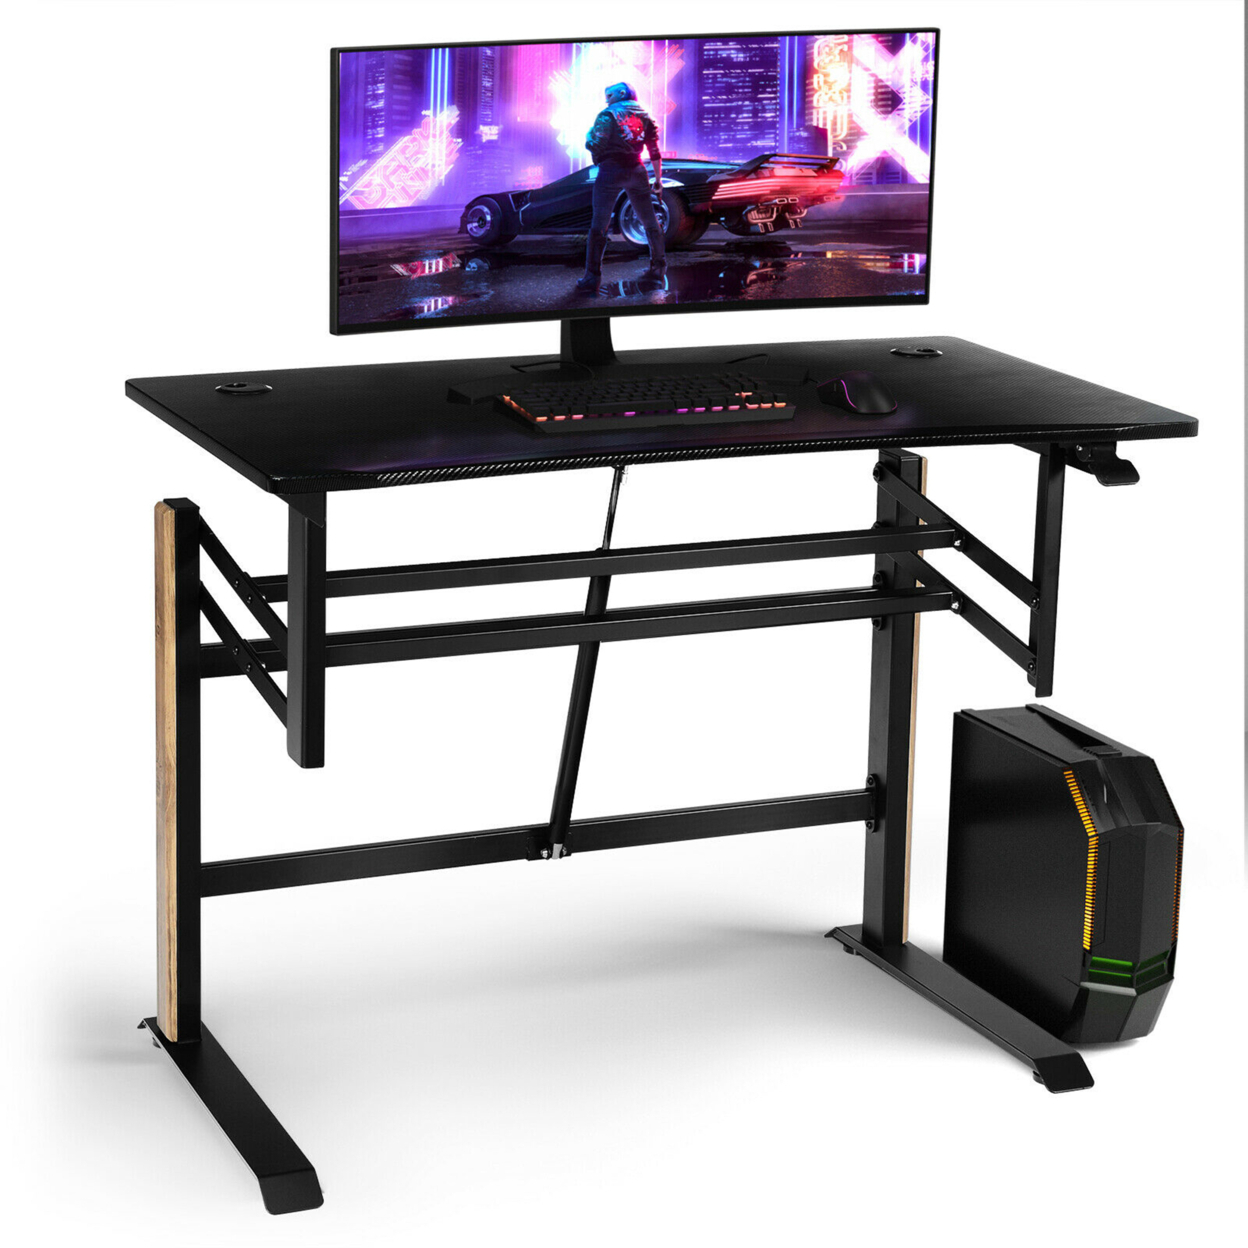 Modern Arozzi Gaming Desk Height Adjustment with Futuristic Setup